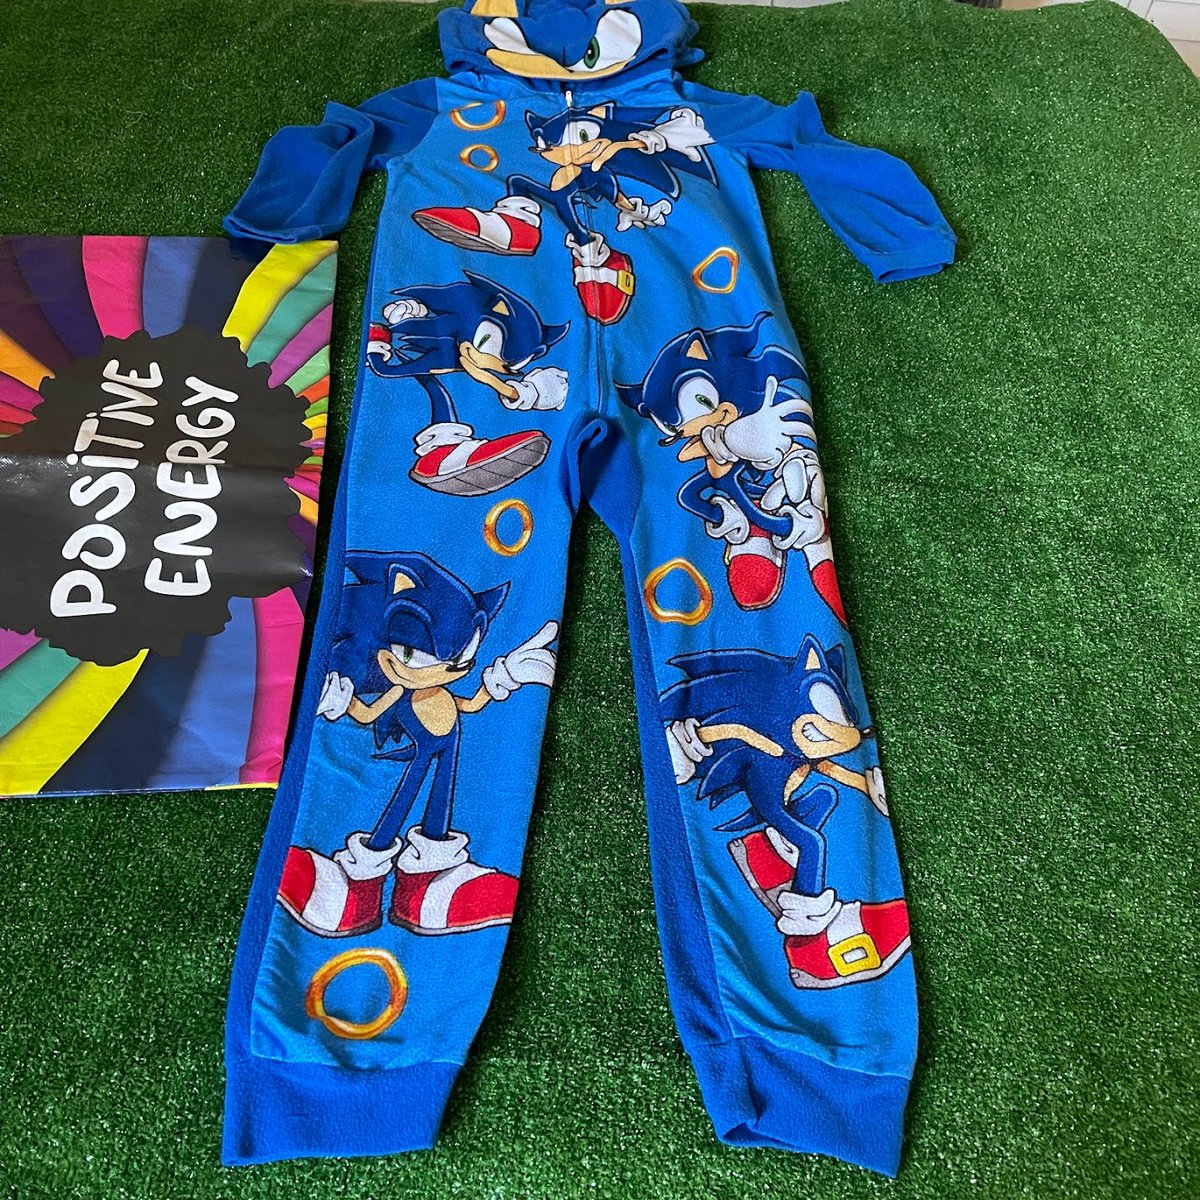 Sonic The Hedgehog Hoodie Union Suit Pajamas Blanket Sleepwear Sonic Ring Size M

#SonicTheHedgehog
#HoodieUnionSuit
#Pajamas
#BlanketSleepwear
#SonicRing
#SizeM
#GamingMerchandise
#SonicFan
#ComfyPajamas
#SleepwearFashion
ebay.com/itm/1263414914…